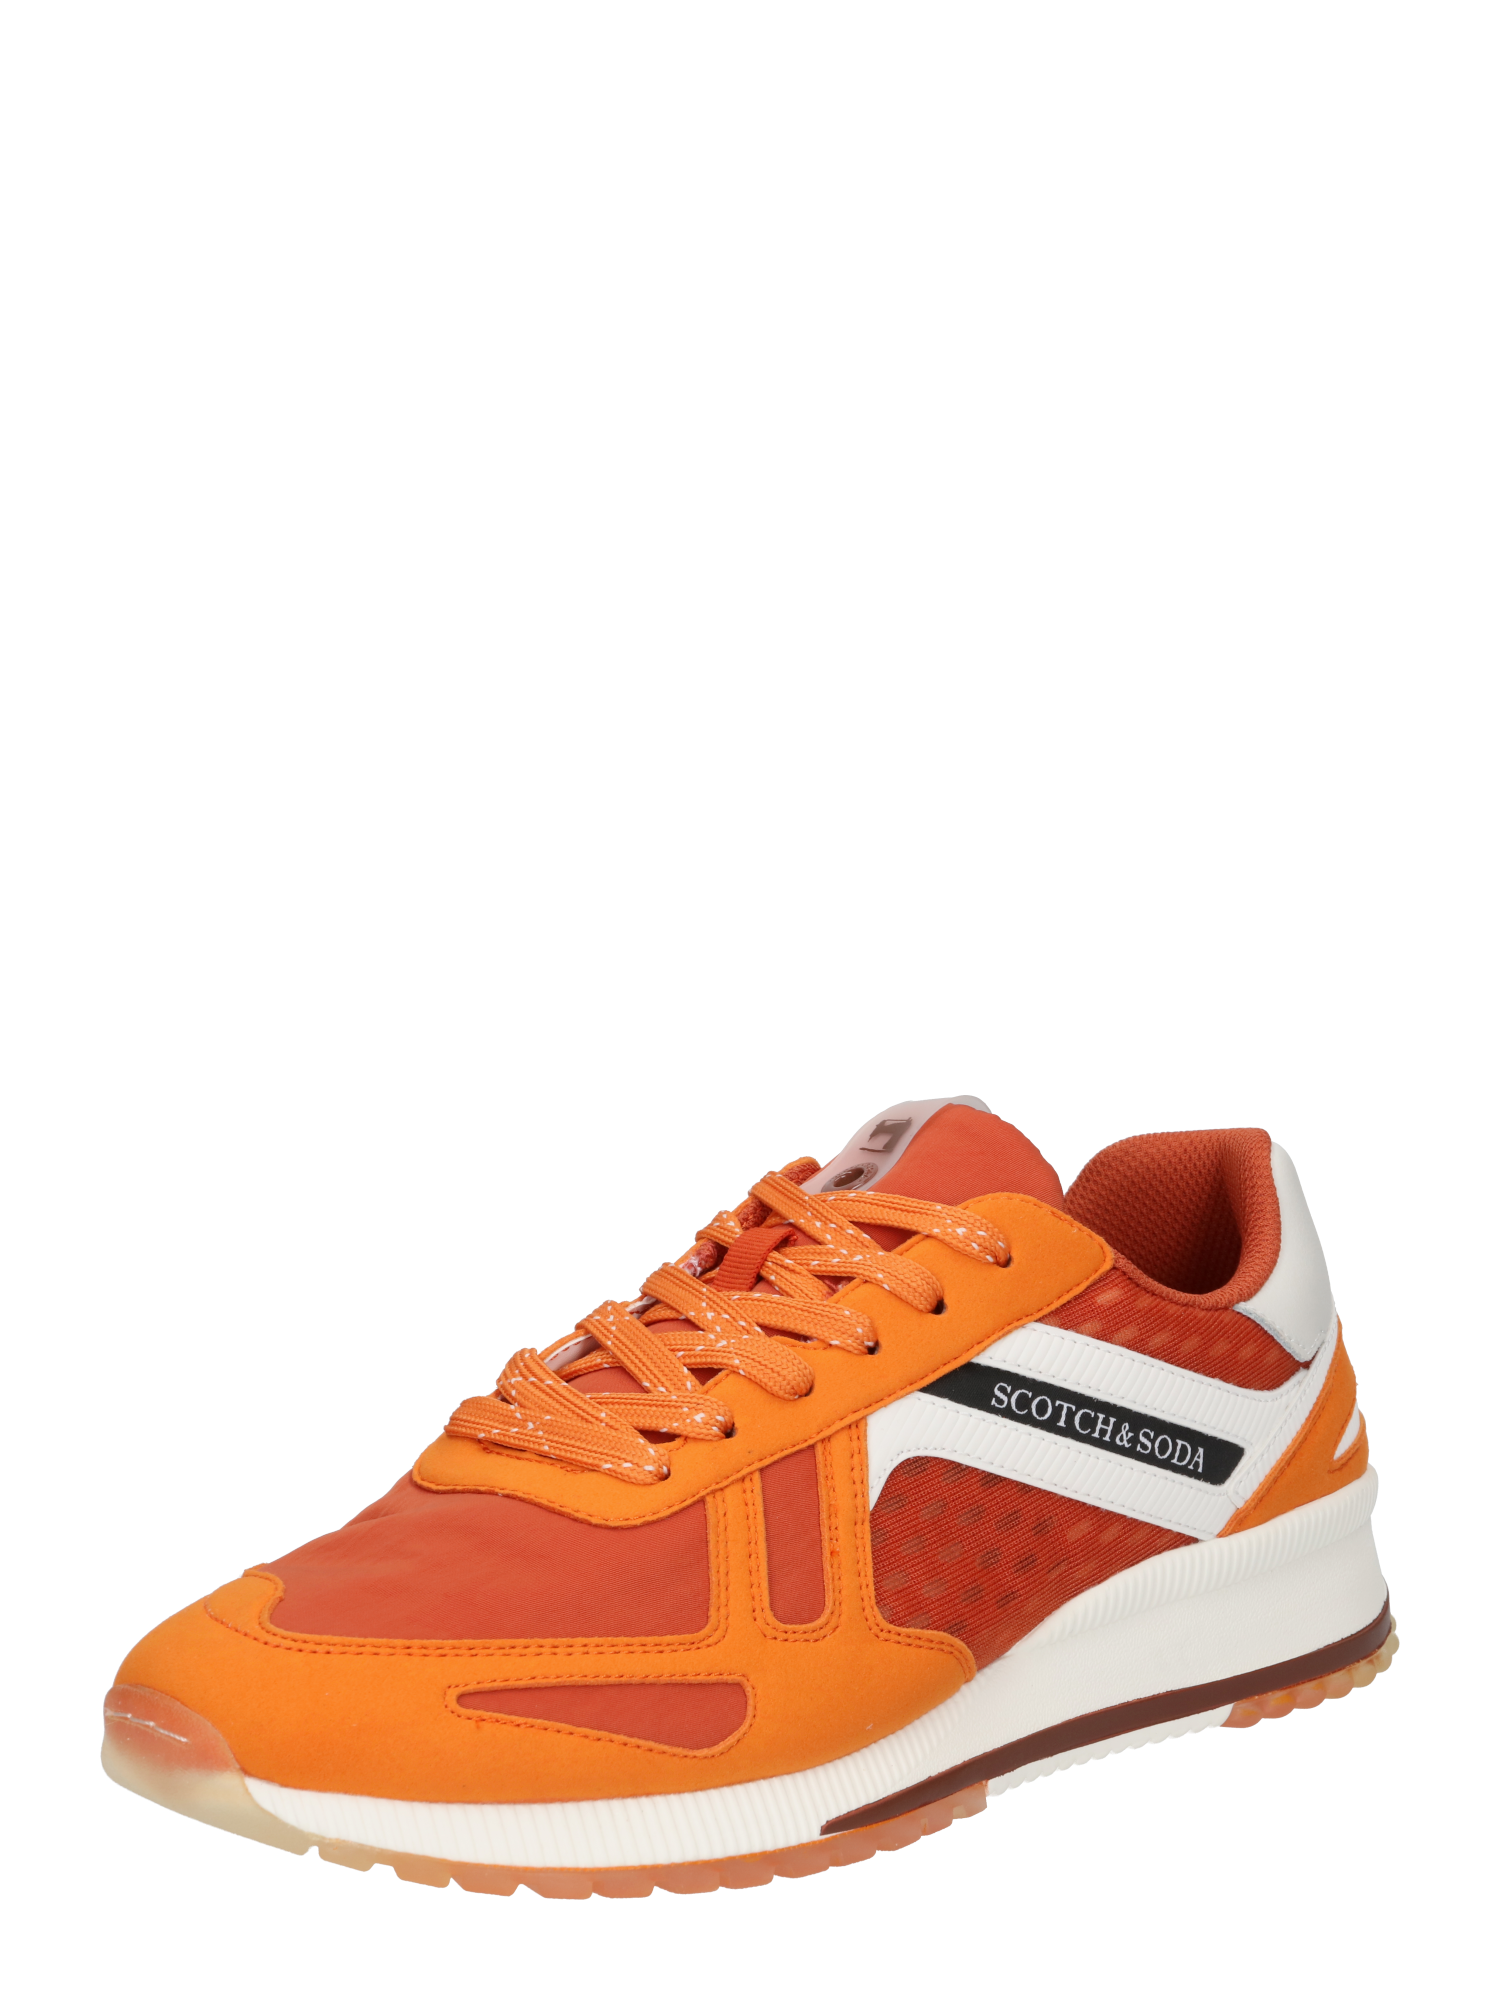 SCOTCH & SODA Sneaker in Orange, Dunkelorange 